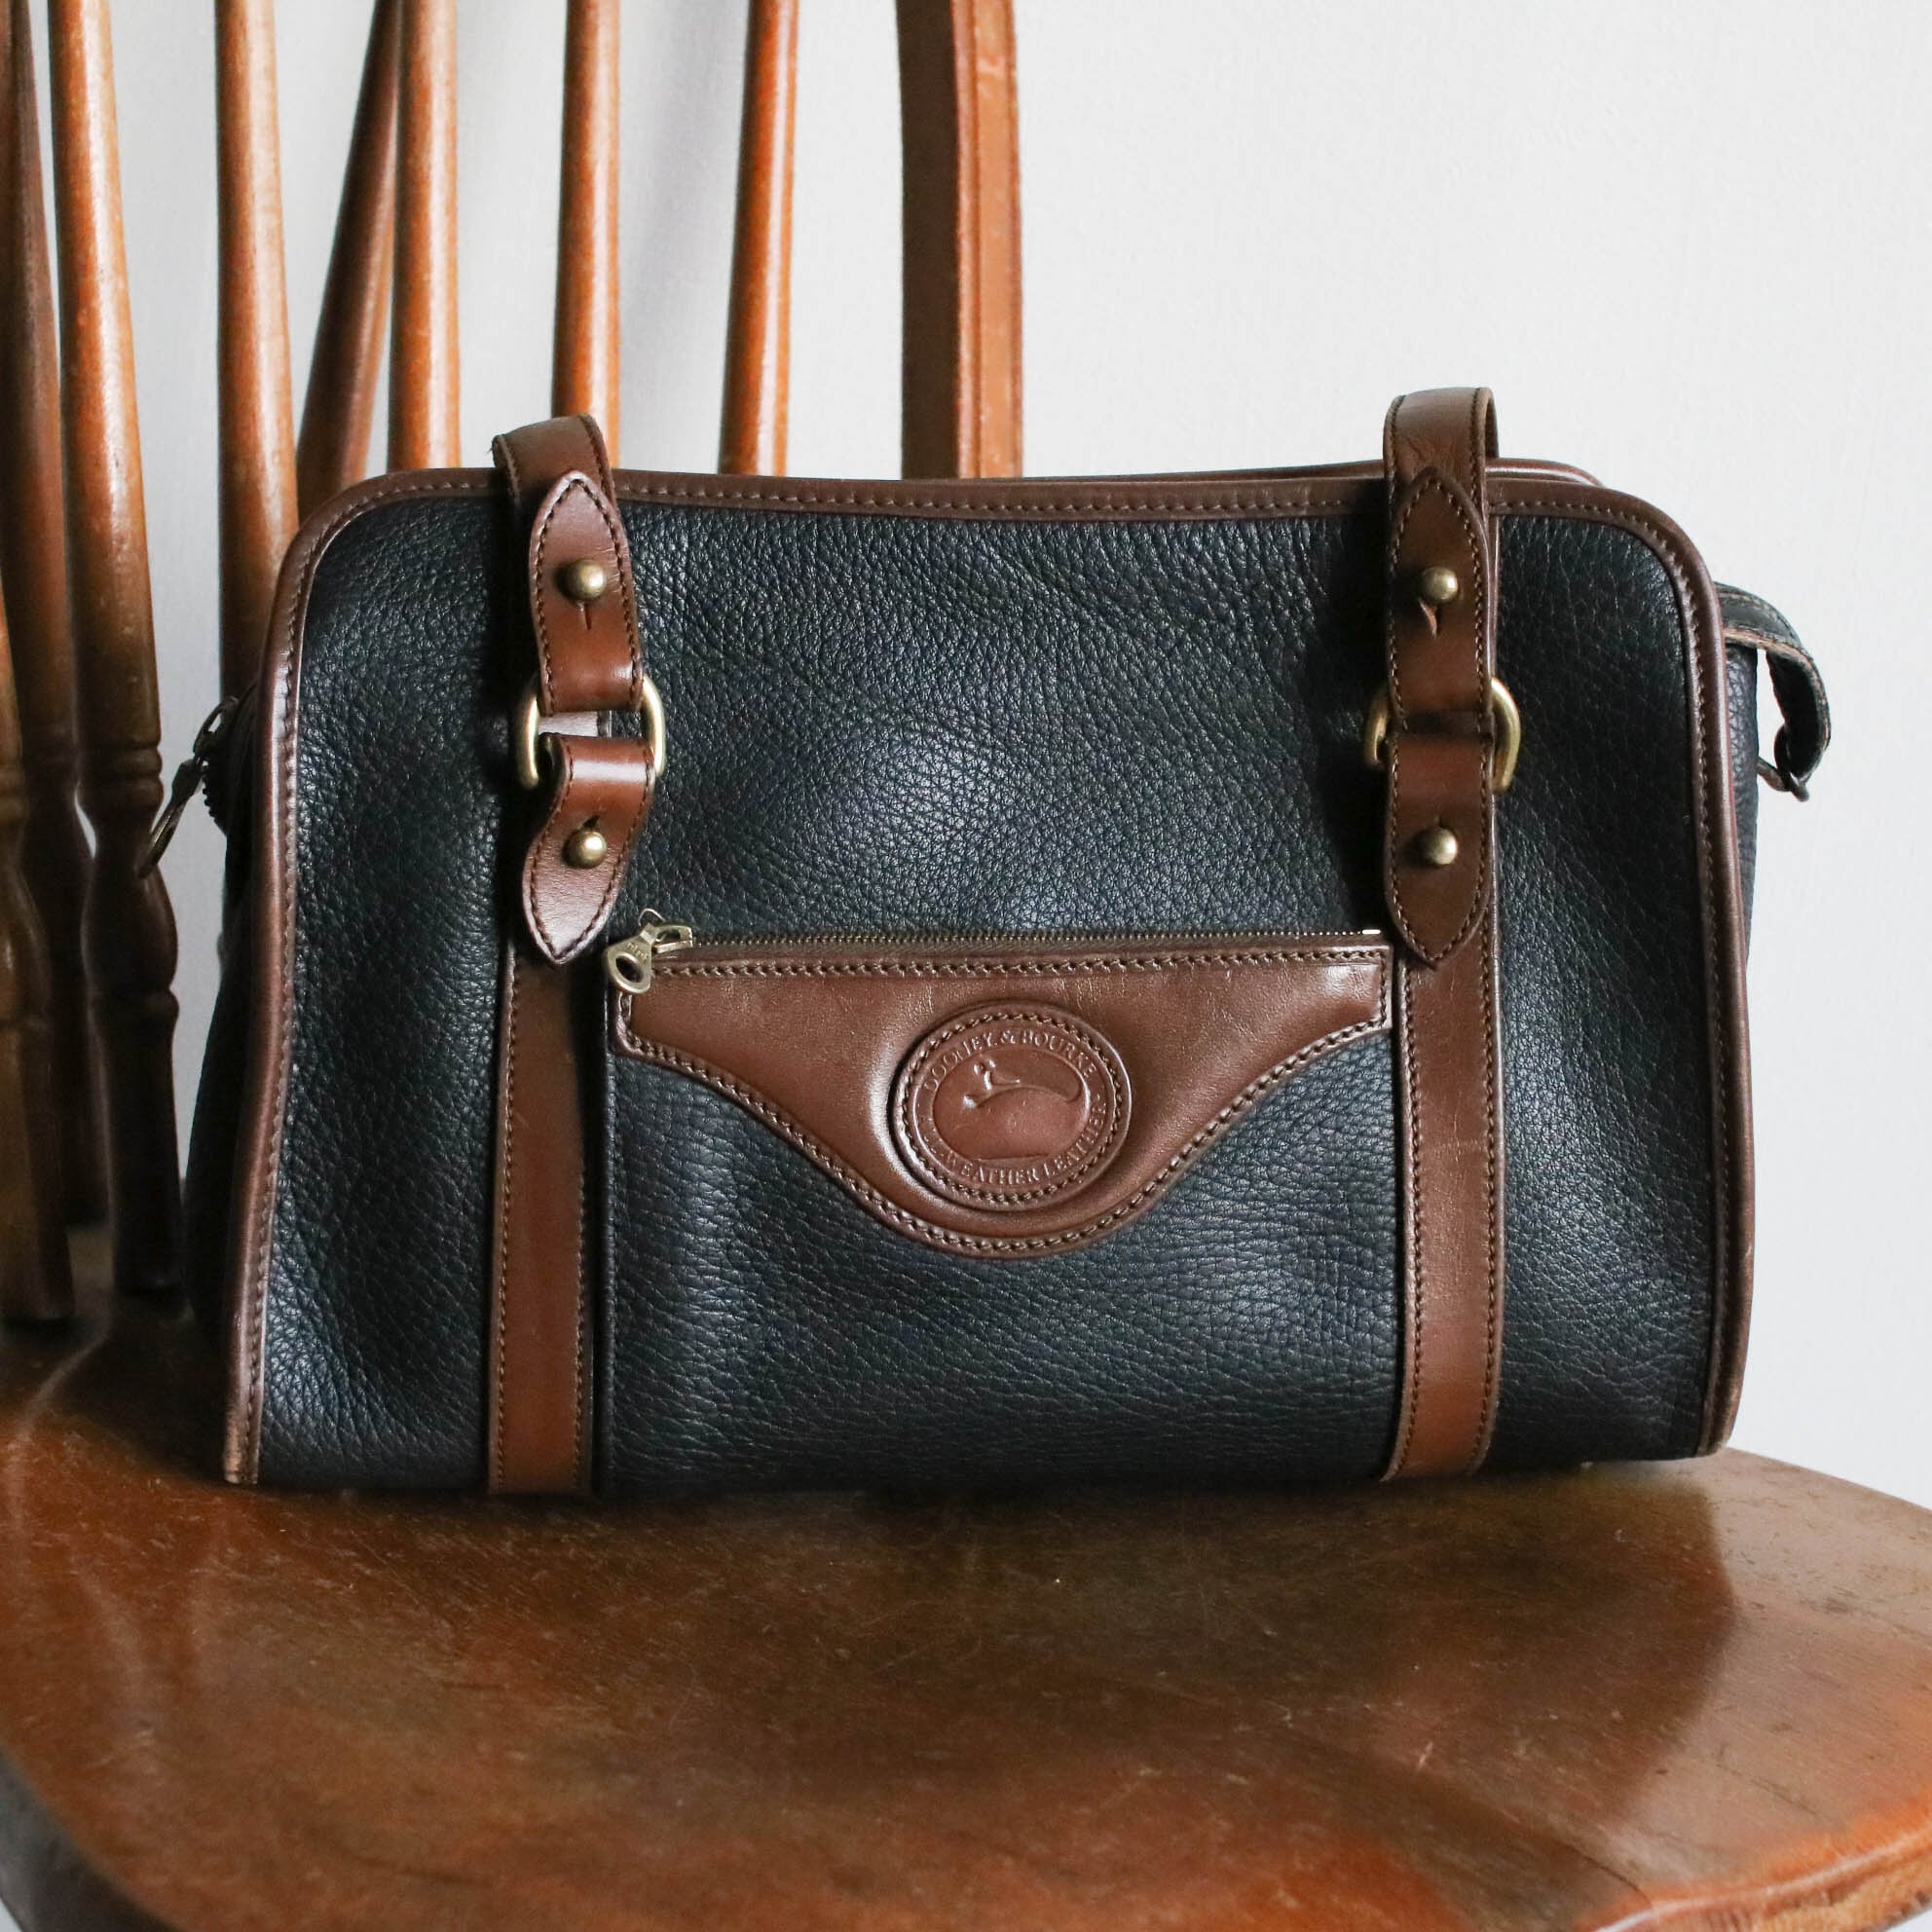 《Dooney & Bourke》 leather bag